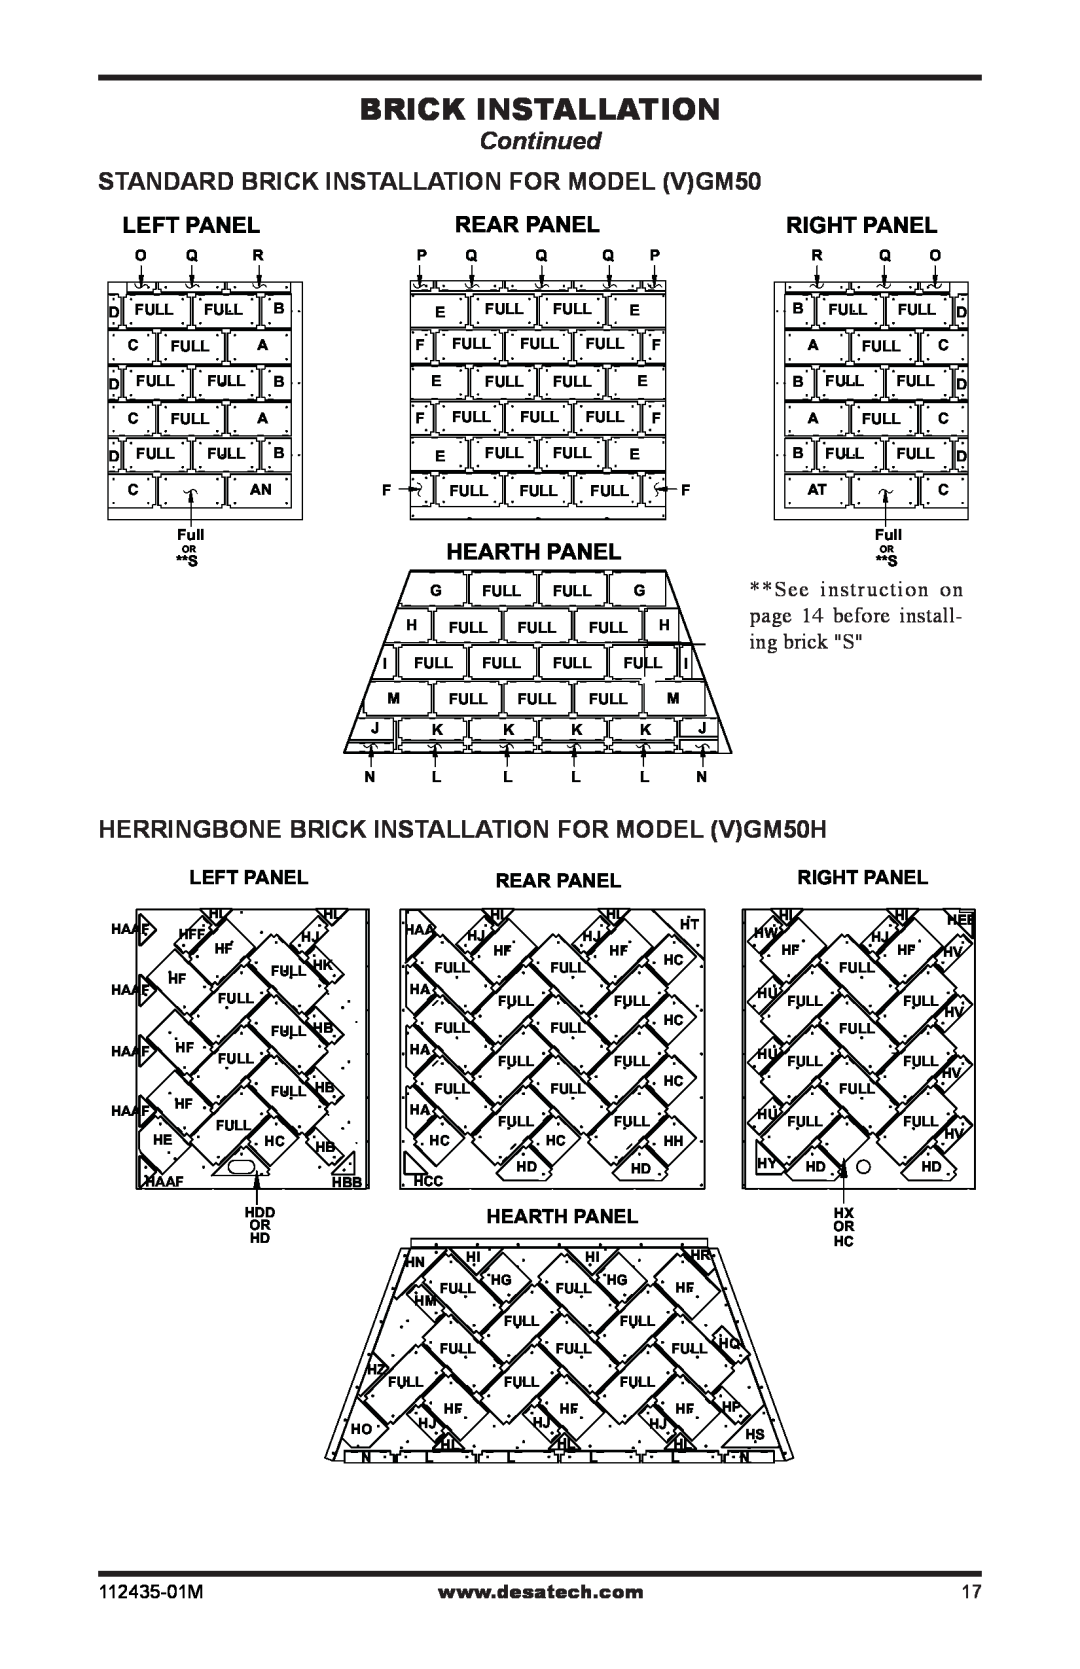 Desa (V)gM36h Continued, Standard Brick Installation for Model VGM50, Herringbone Brick Installation for Model VGM50H 